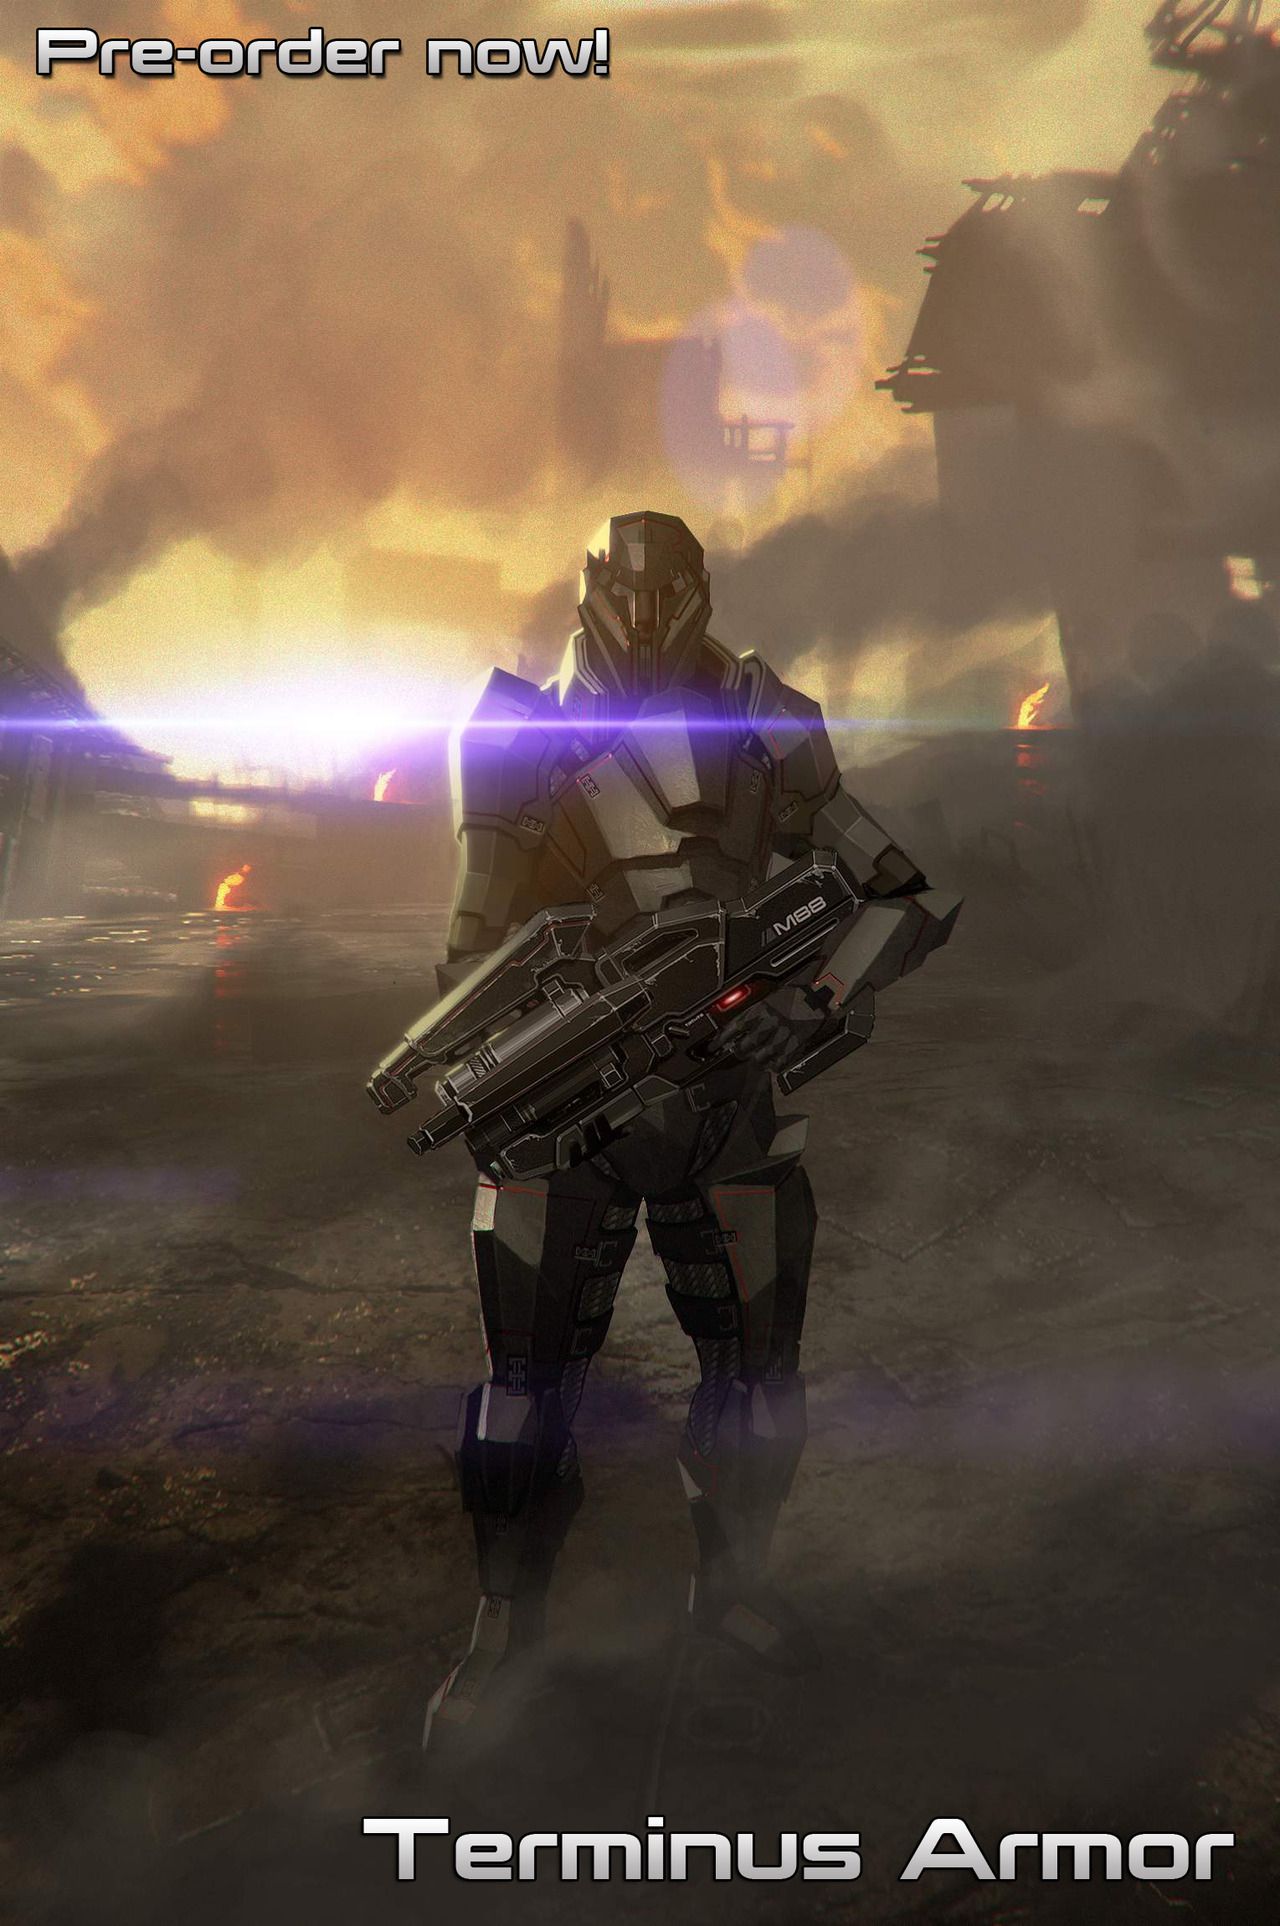 Mass Effect 2 Terminus Armor